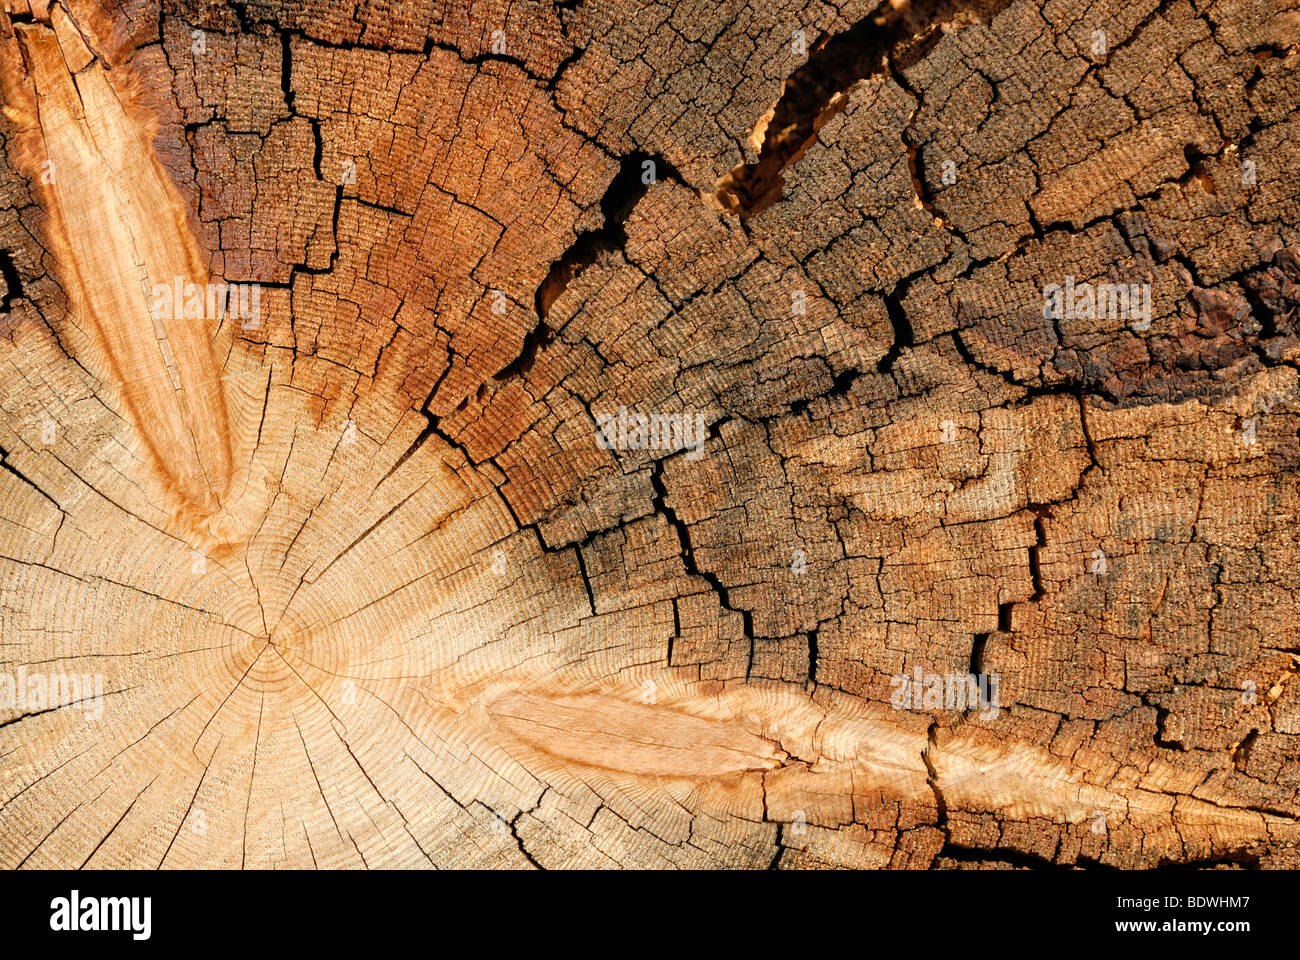 Jeffrey Pine (Pinus Jeffreyi), Stamm Querschnitt, detail, Mount San Jacinto State Park, Palm Springs, Kalifornien, Ca Stockfoto